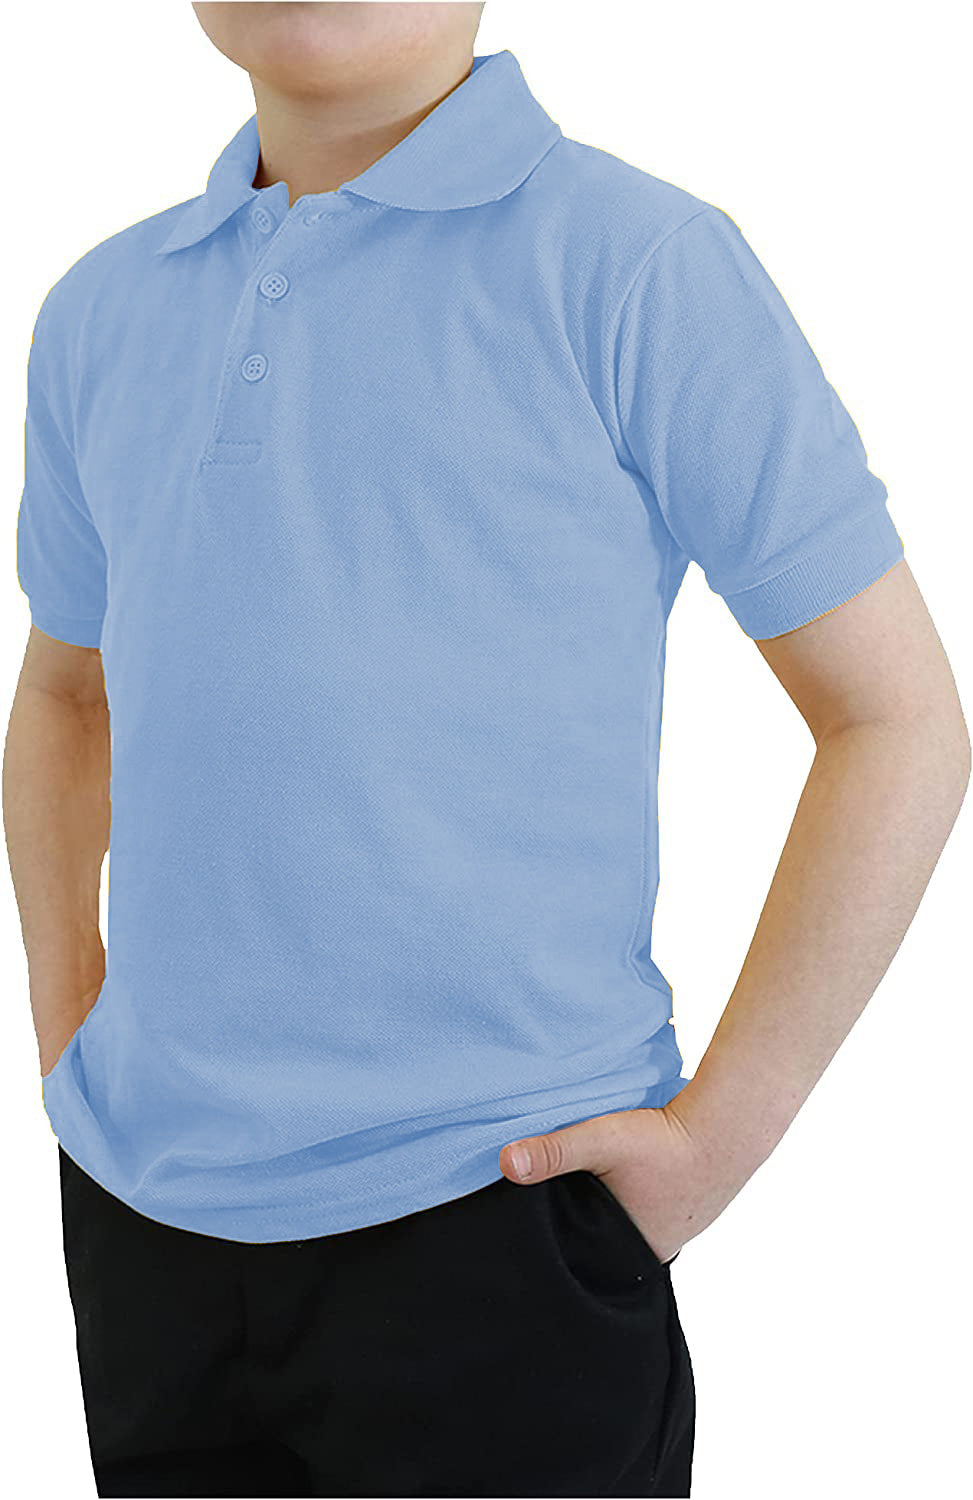 Galaxy Uniform Boys' Long-sleeved Pique Polo Shirt - Blue, 20